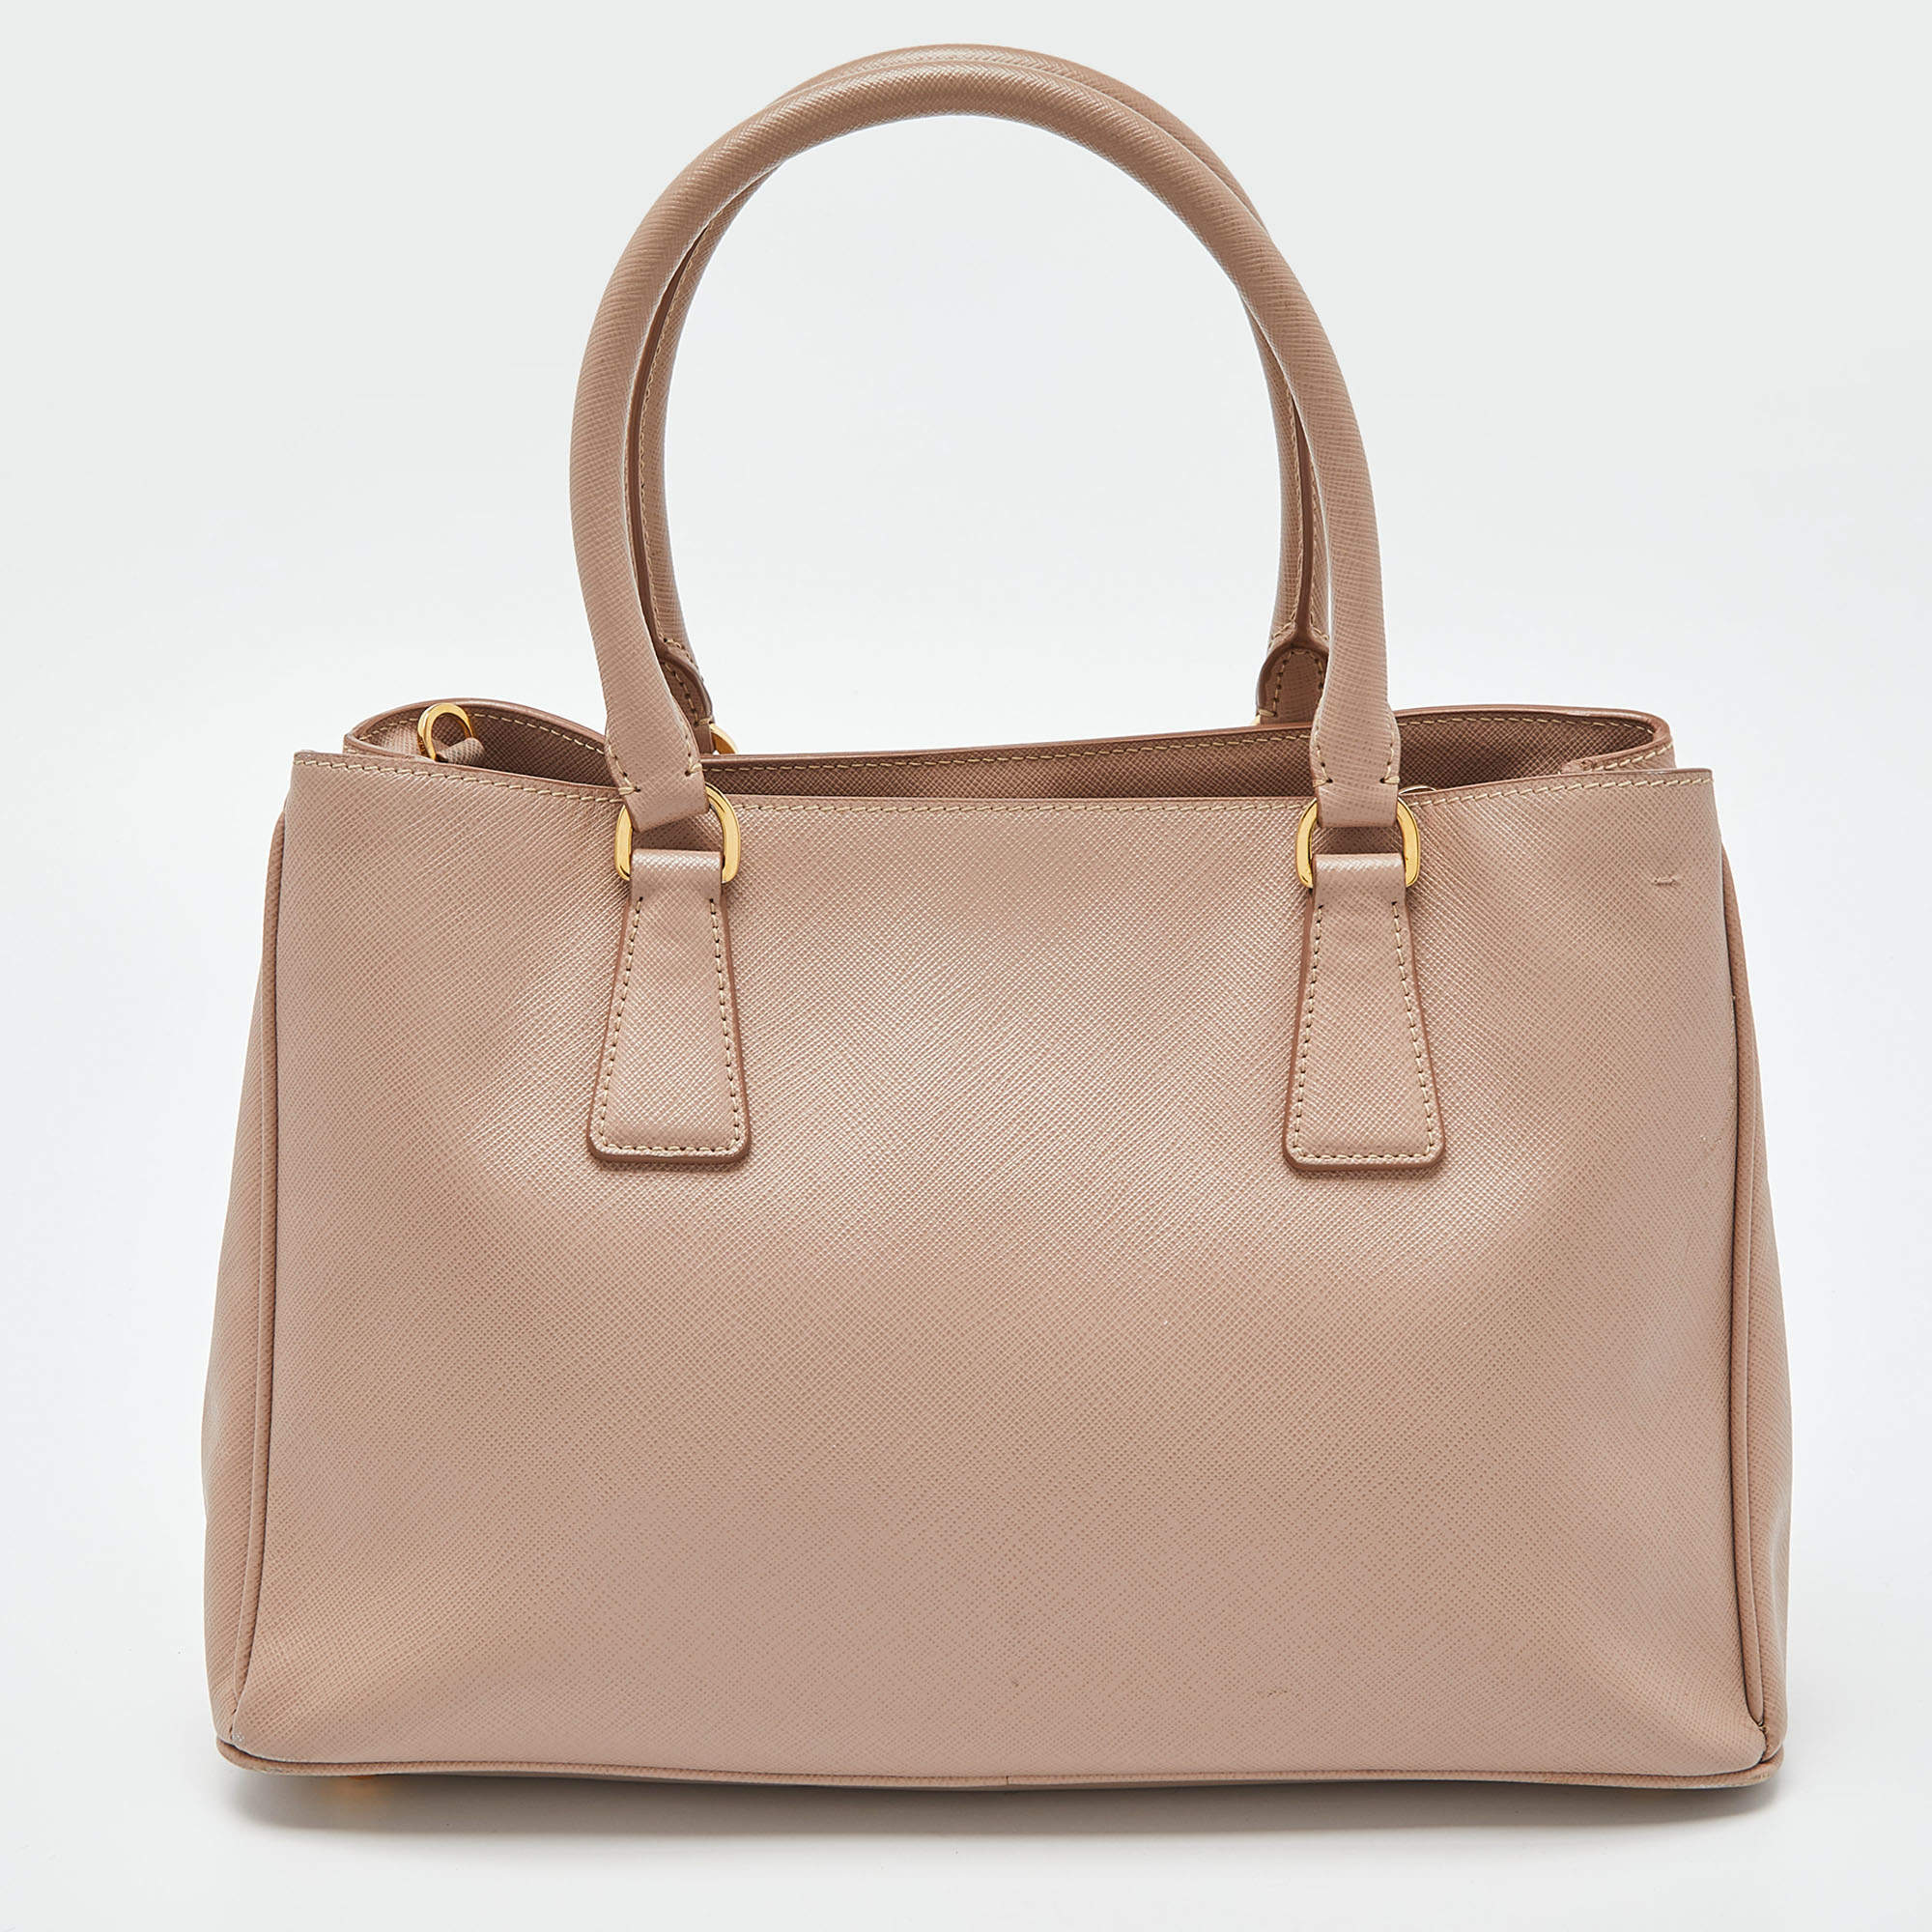 PRADA Galleria large bag tote bag beige leather clochette by fedex shipping  B22